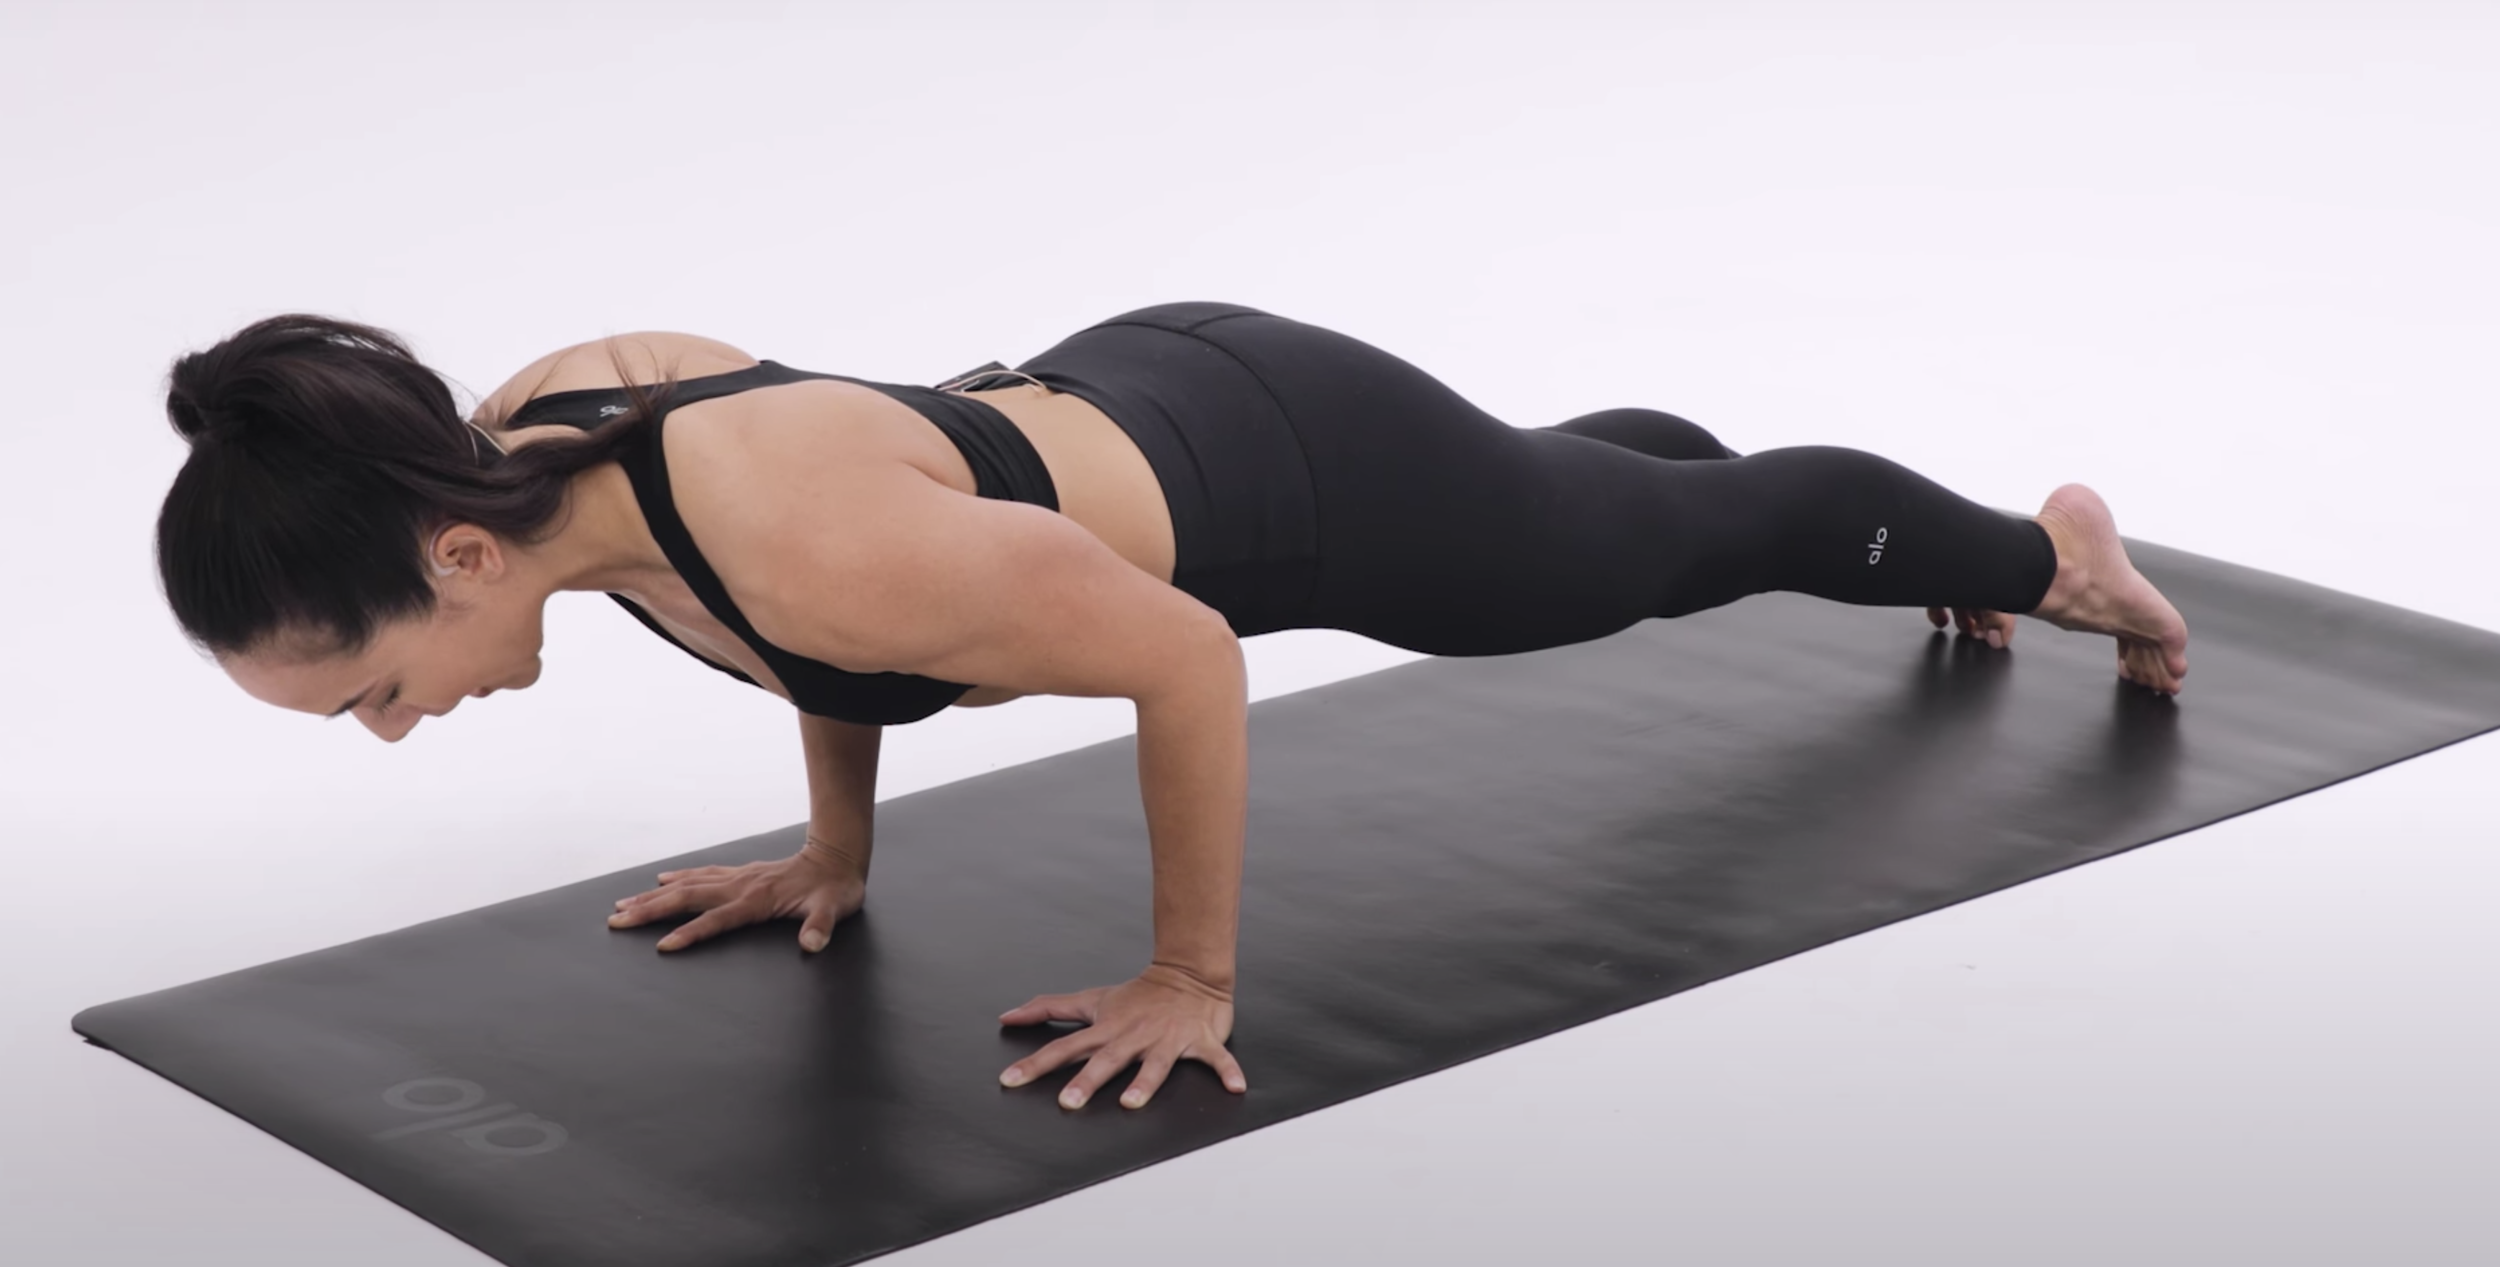 Chaturanga Dandasana Yoga Pose: How to Do It With Perfect Form